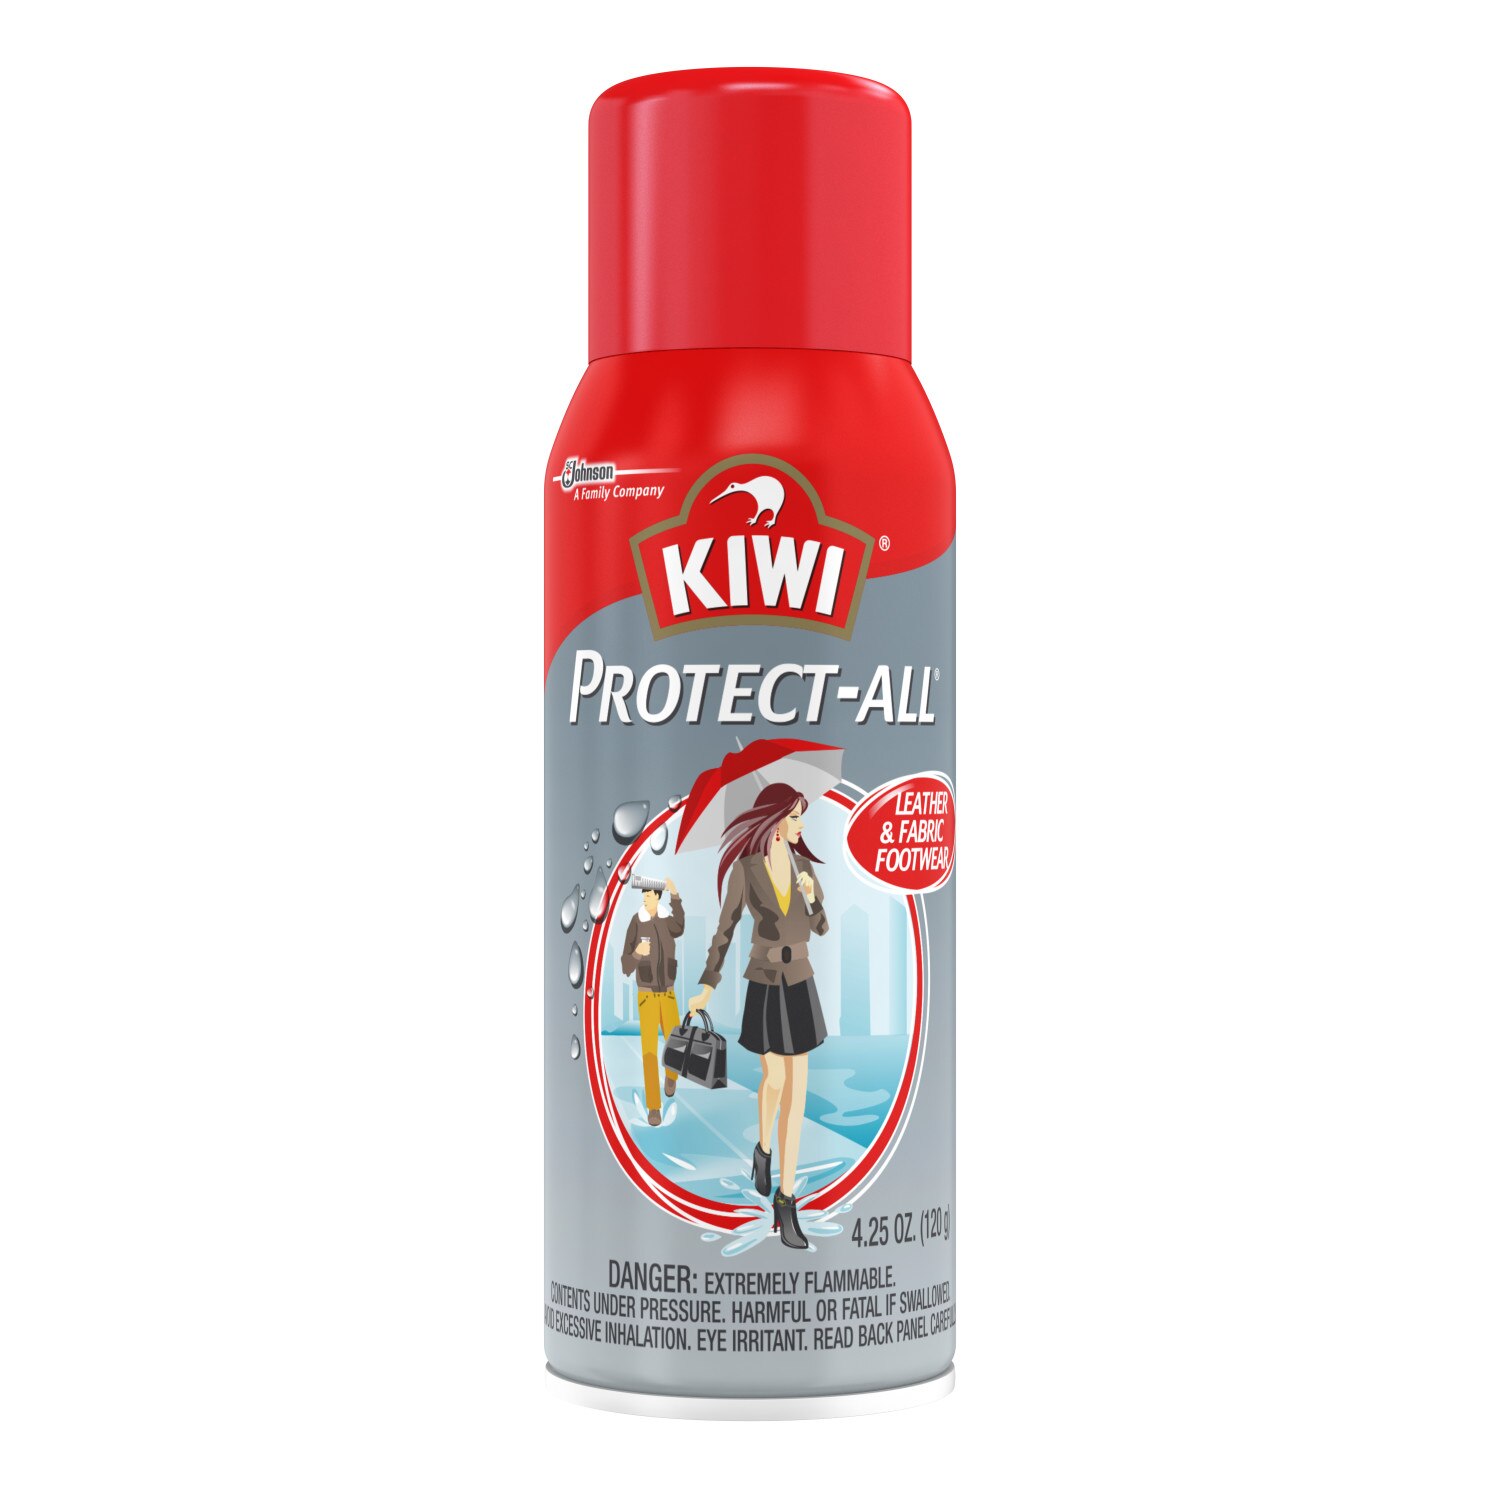 KIWI Protect All Shoe Spray